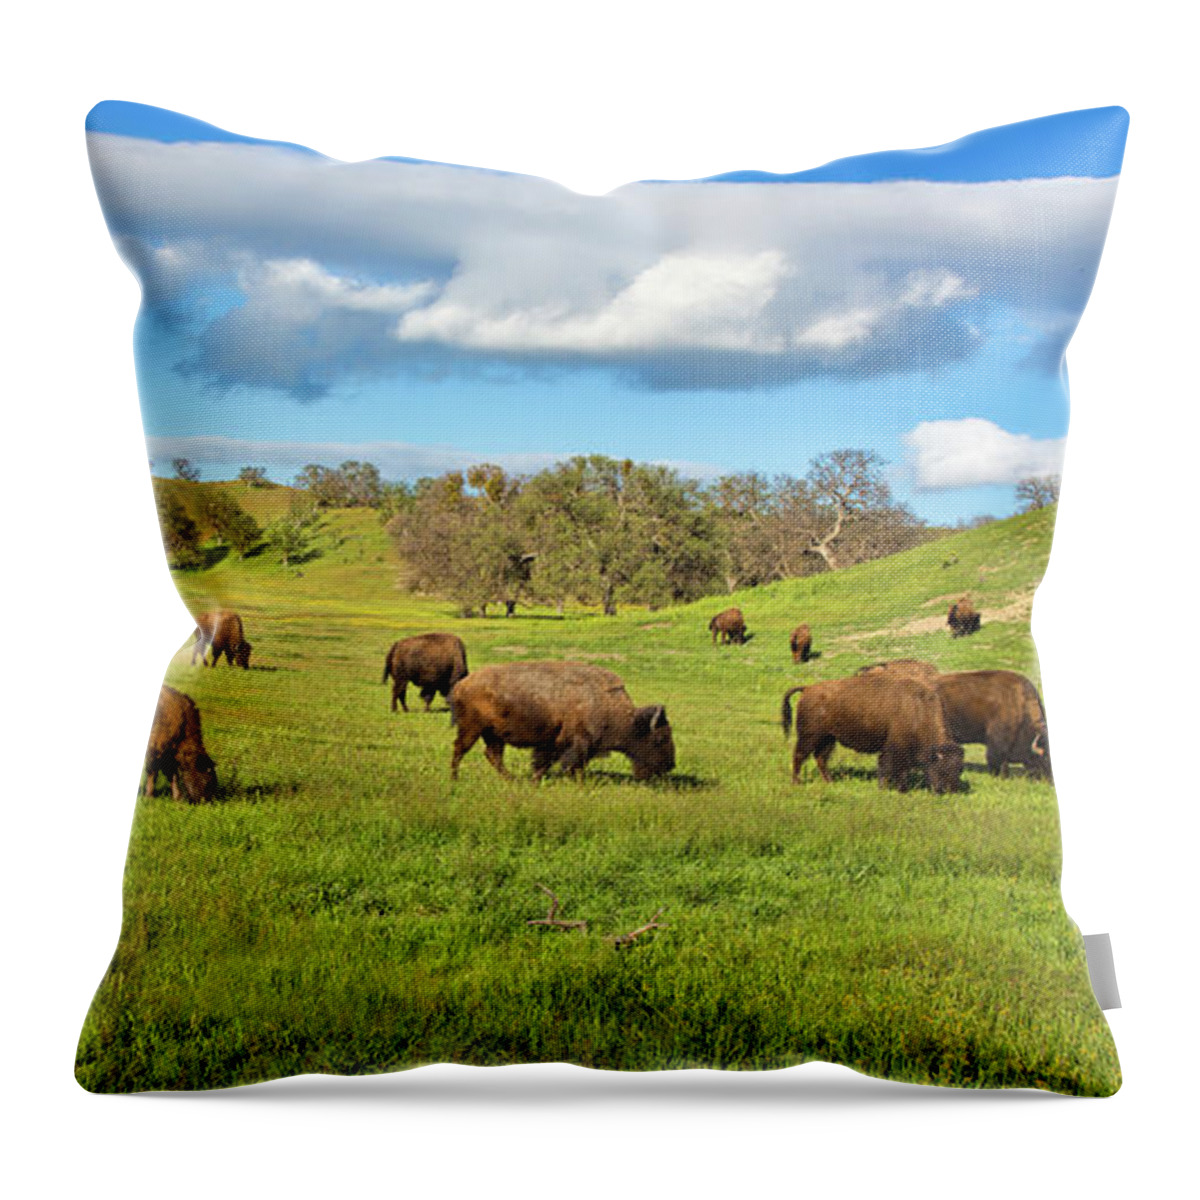 Buffalo Throw Pillow featuring the photograph Grazing Buffalo by Mimi Ditchie